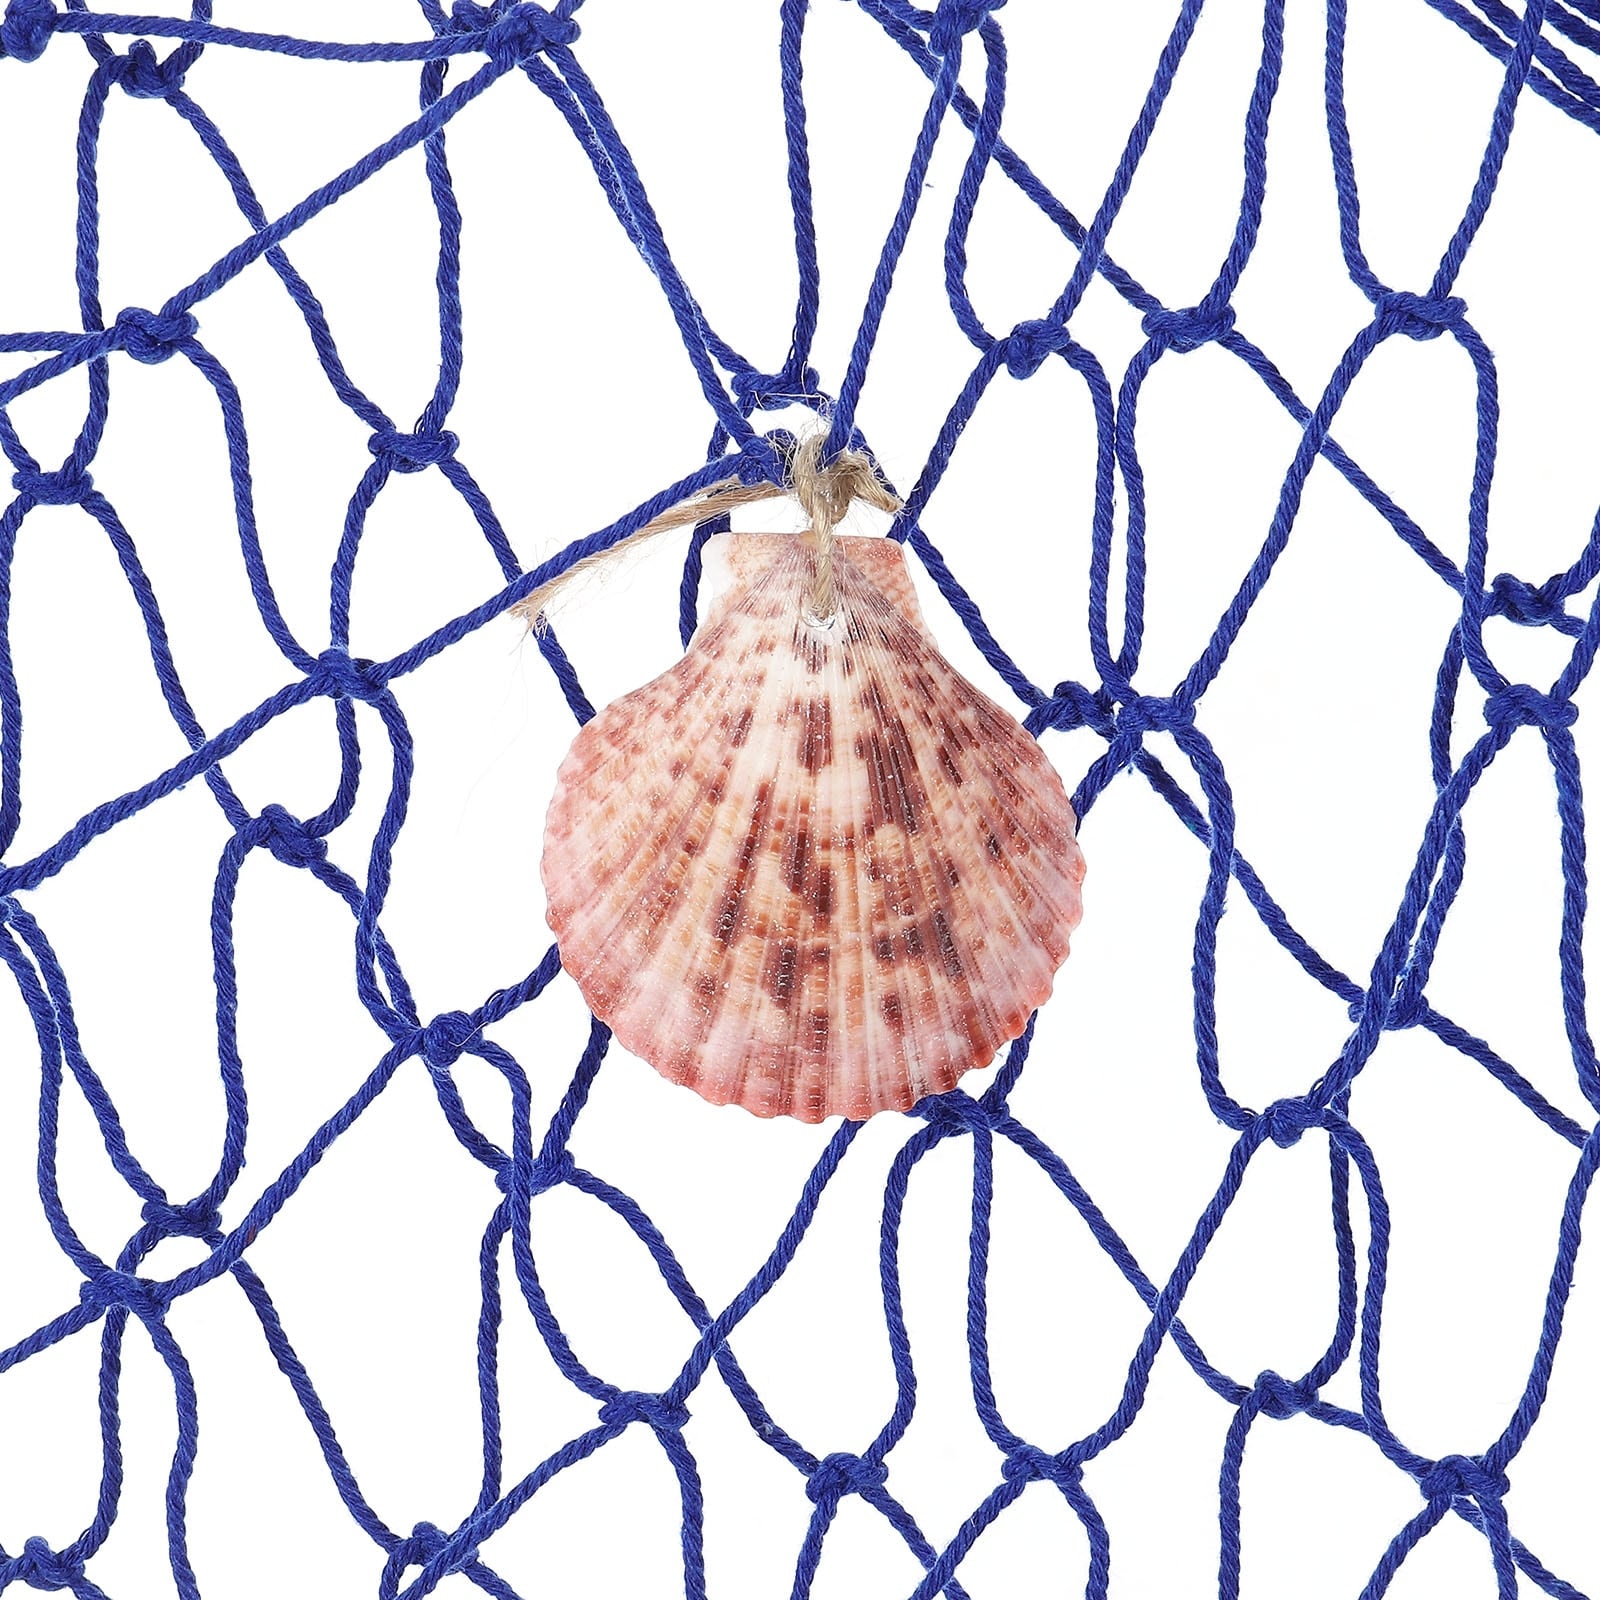 Fishing Net Decor, 2 Pack 80 x 60 Fish Net Decor with Sea Shells